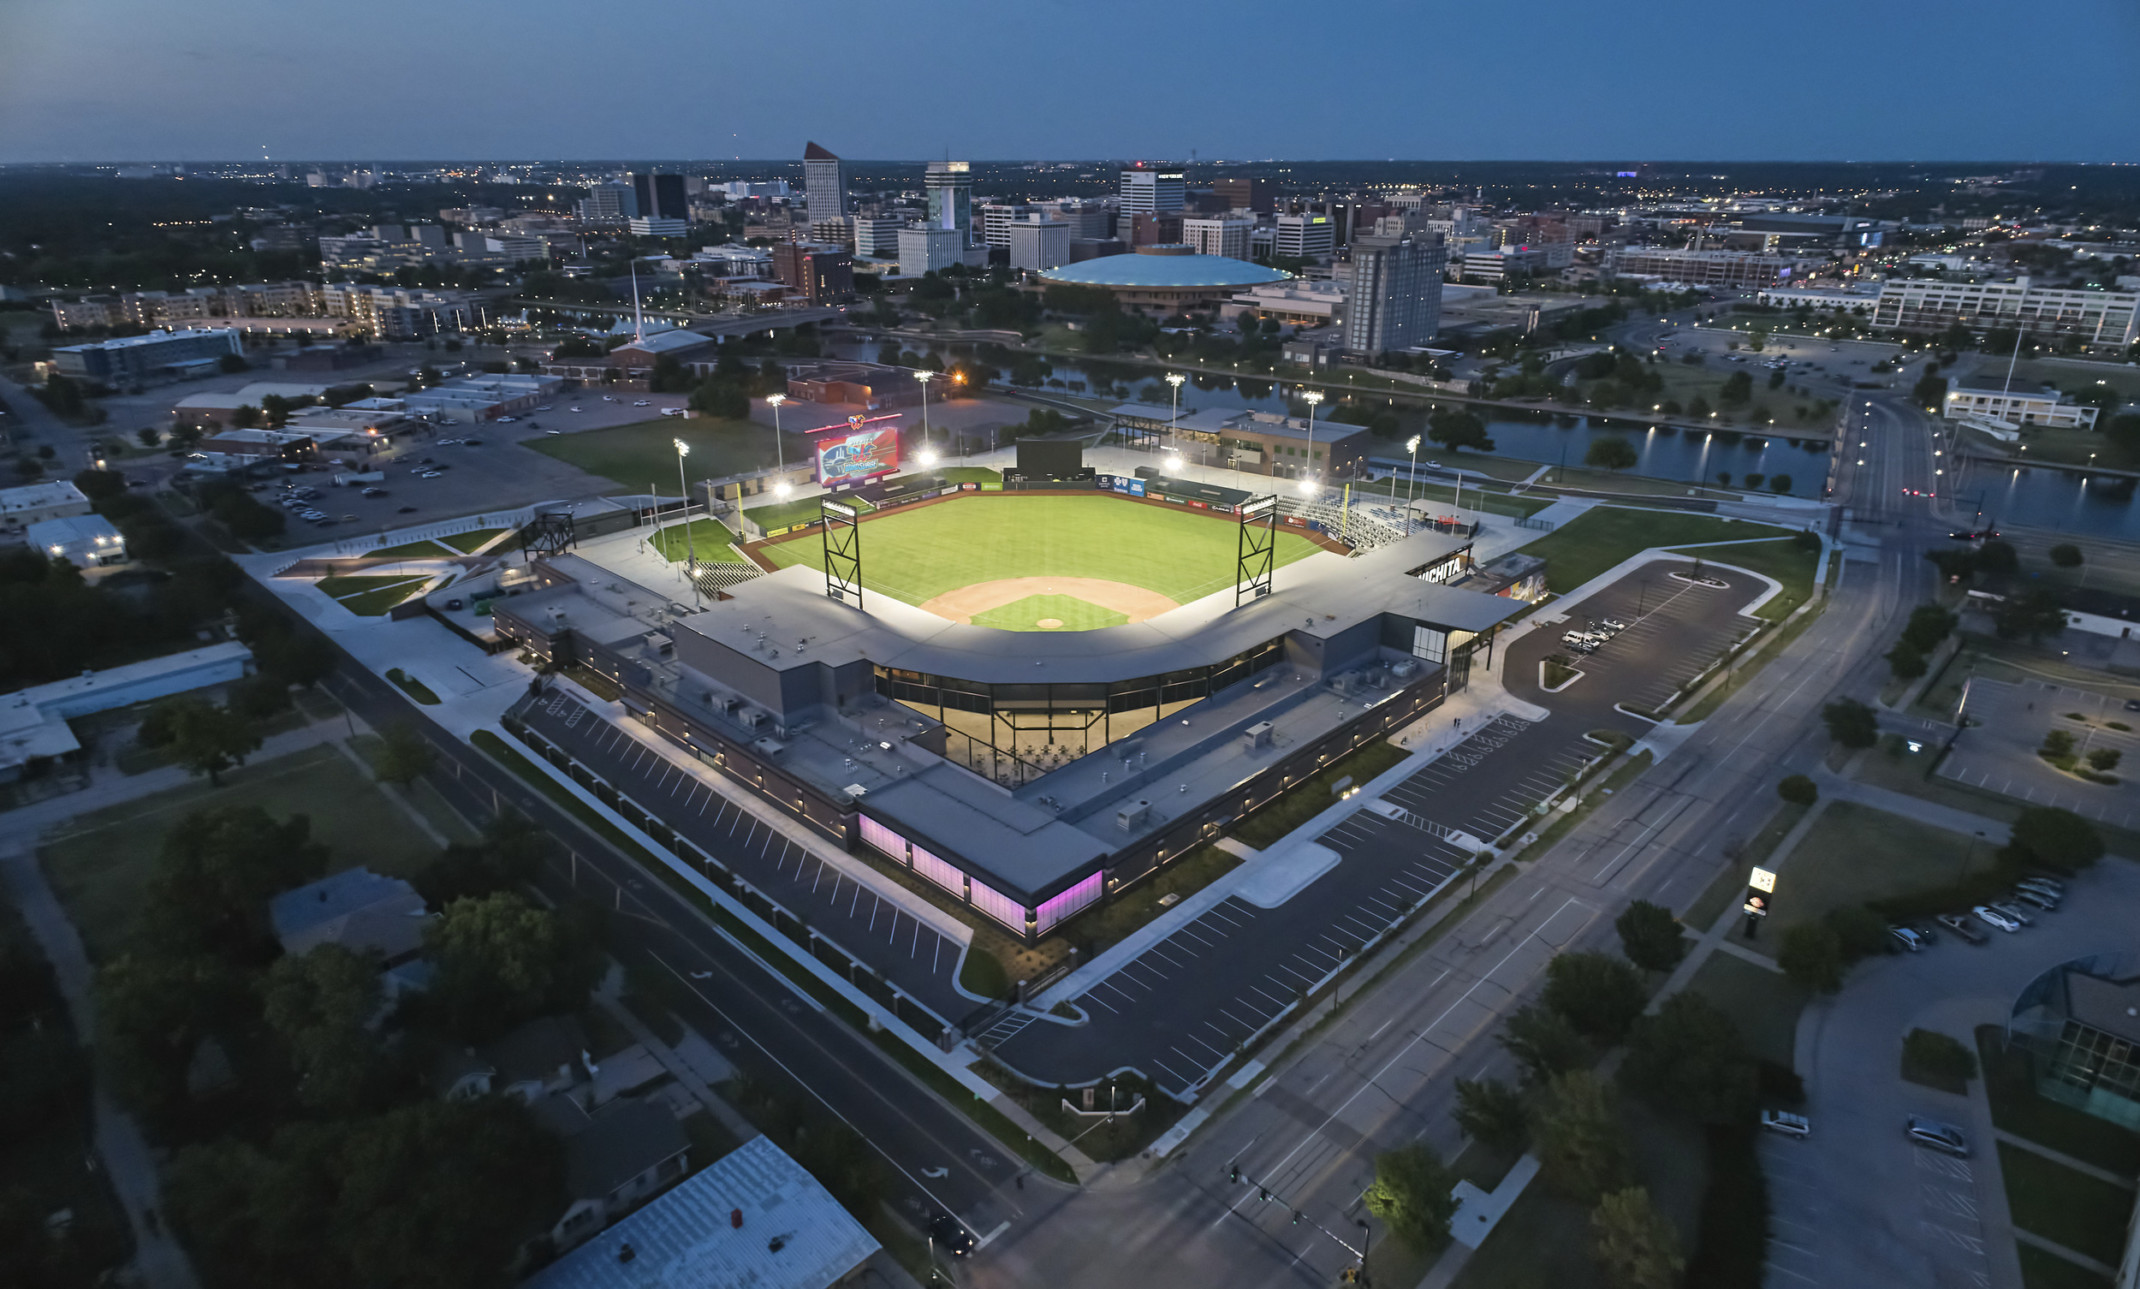 Riverfront Stadium home of the Wichita Wind Surge aerial view with baseball field illuminated at night